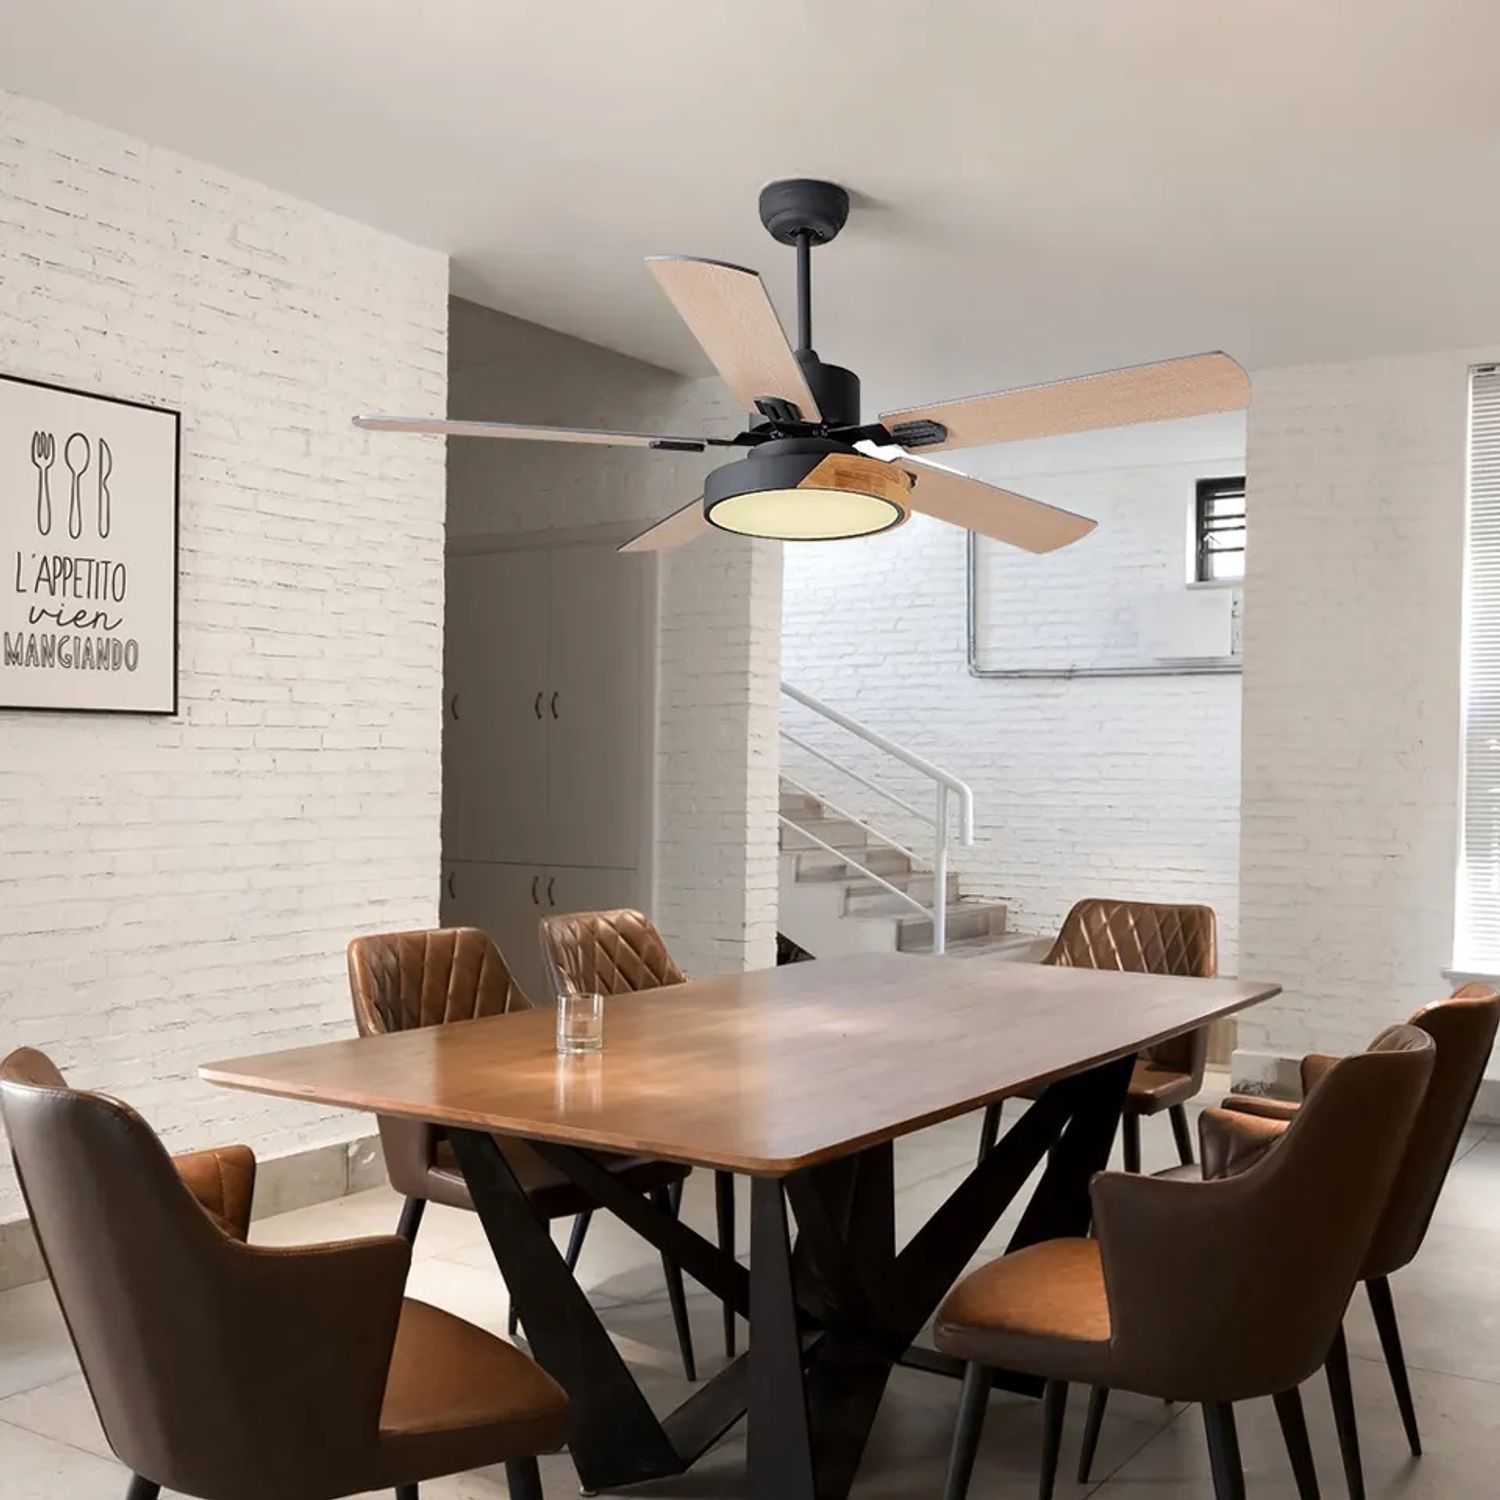 KBS 52" silent ceiling fan with light